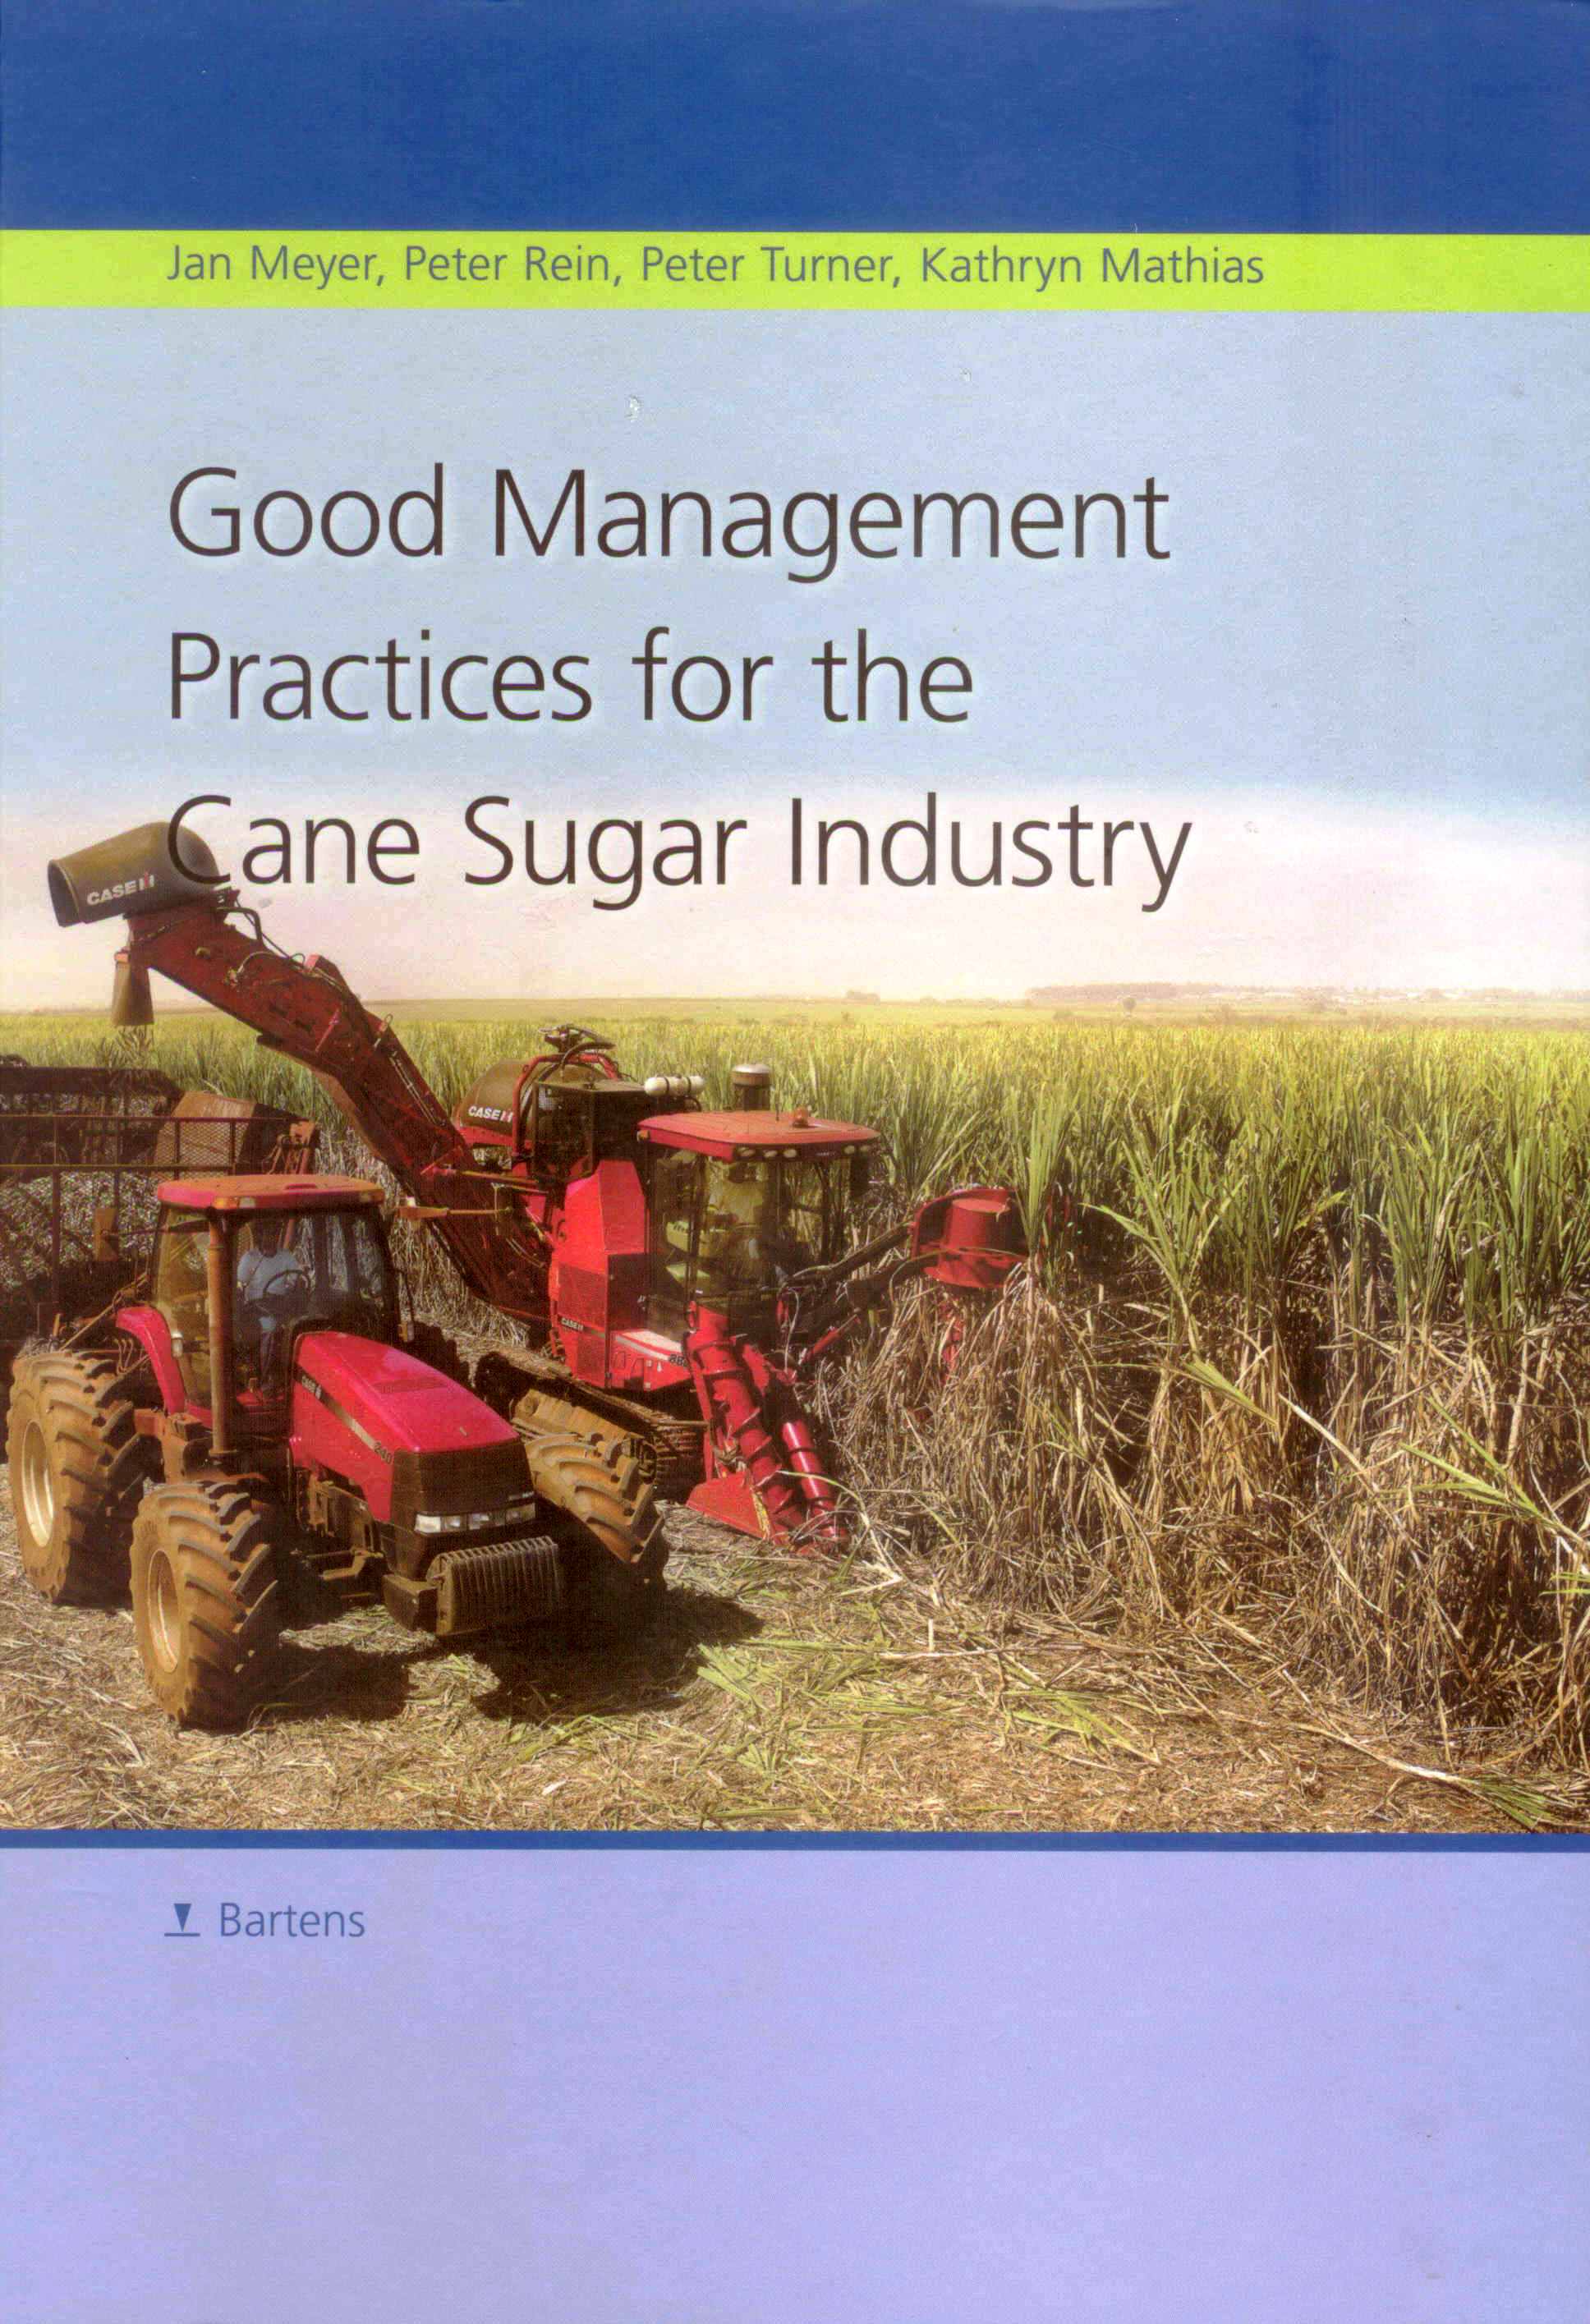 http://www.cenicana.org/investigacion/seica/imagenes_libros/2013/CaratulaGoodManagementPractices_Cane_SugarIndustry.jpg